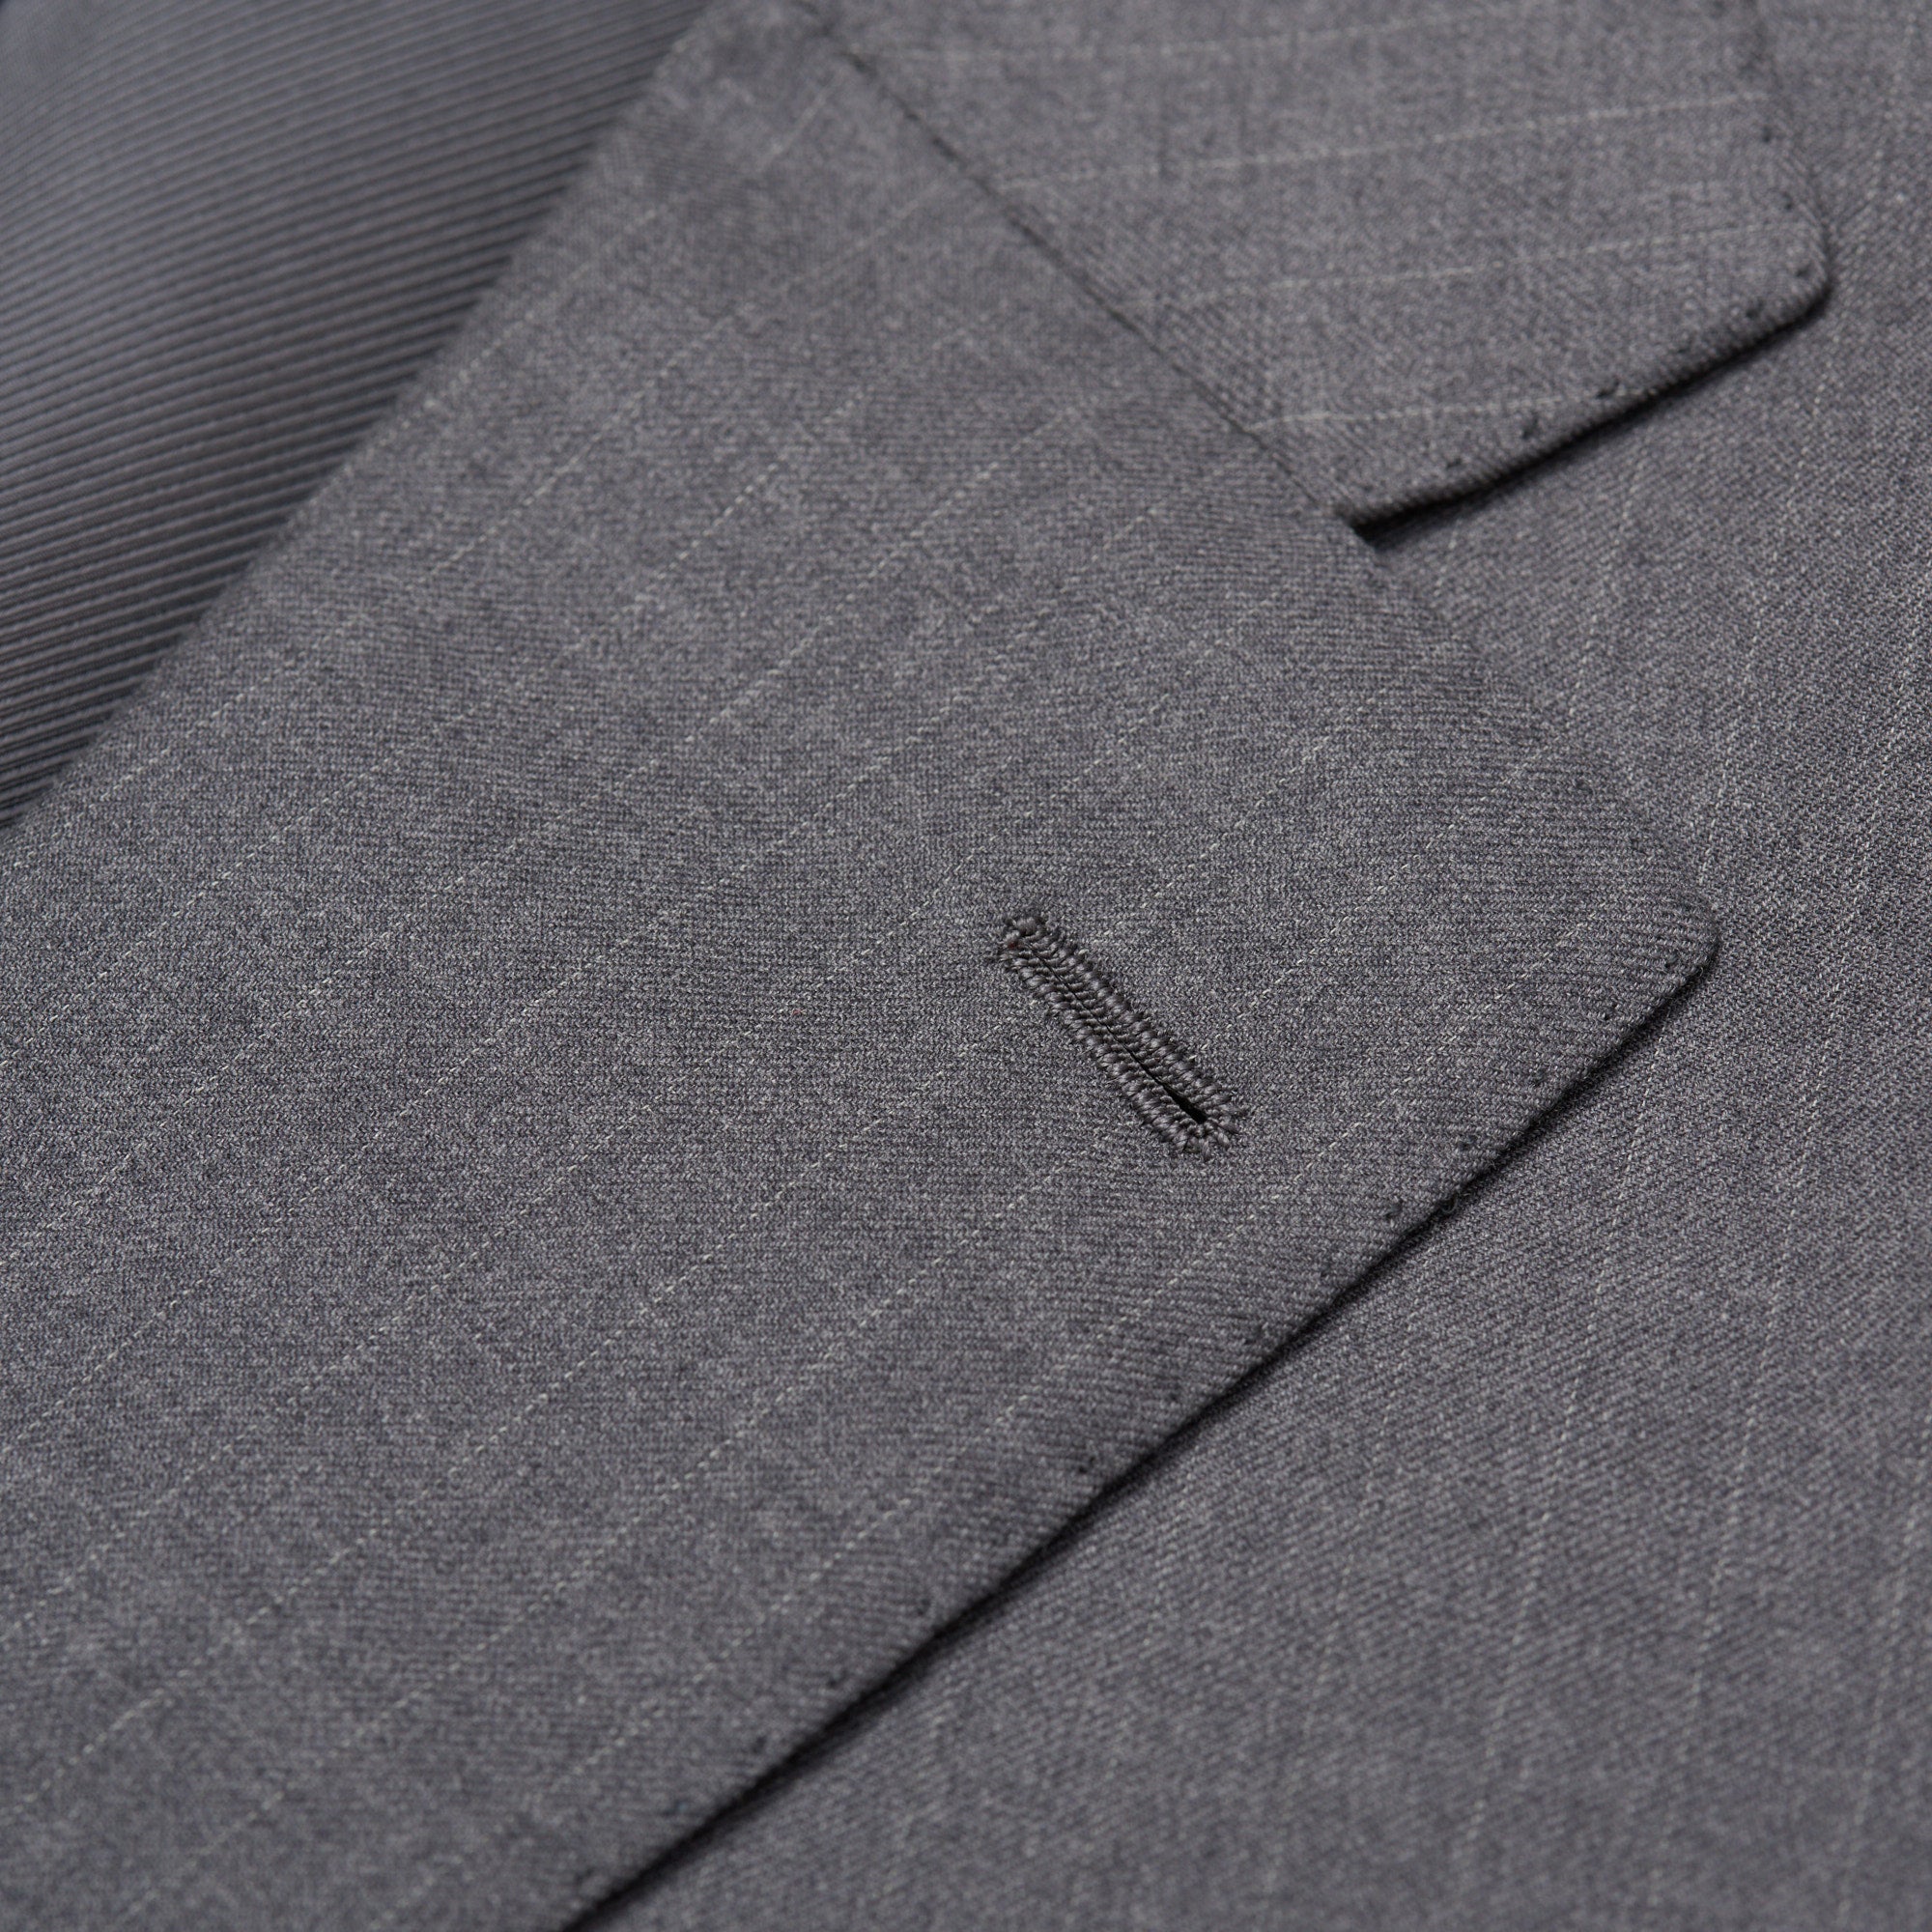 CESARE ATTOLINI Napoli Handmade Gray Striped Wool Business Suit EU 54 NEW US 44 CESARE ATTOLINI